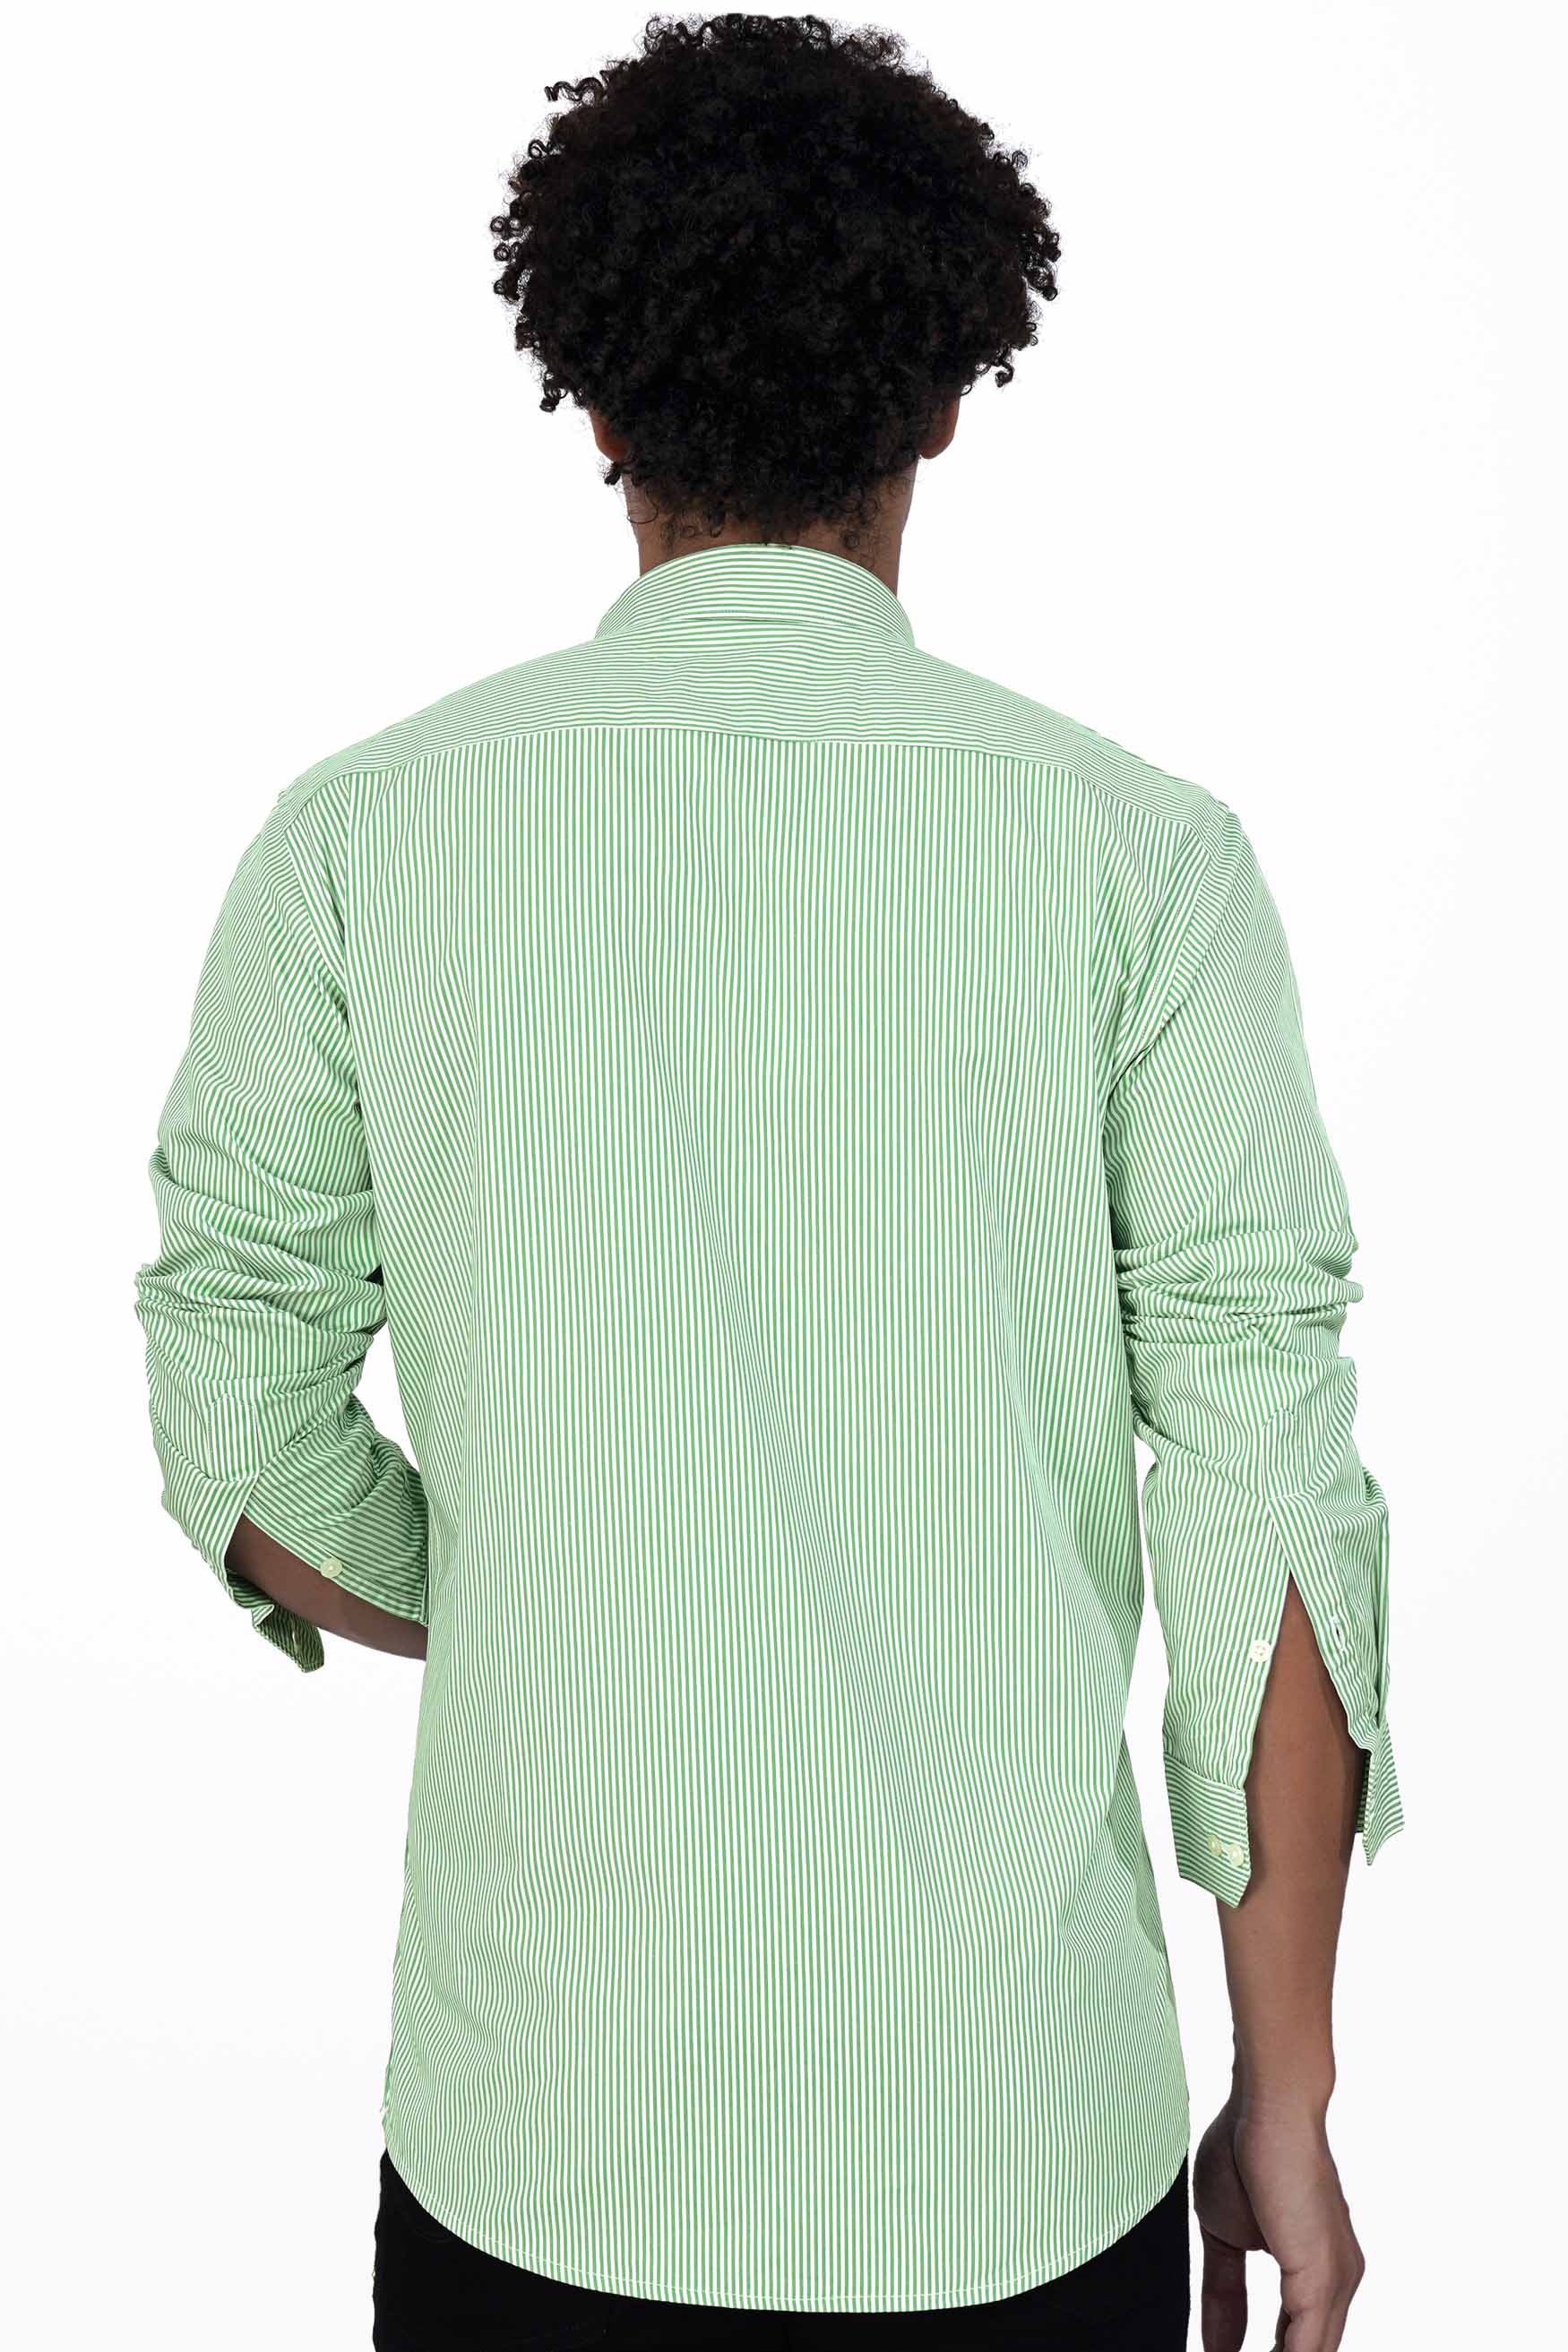 Clover Green and White Striped Premium Cotton Shirt